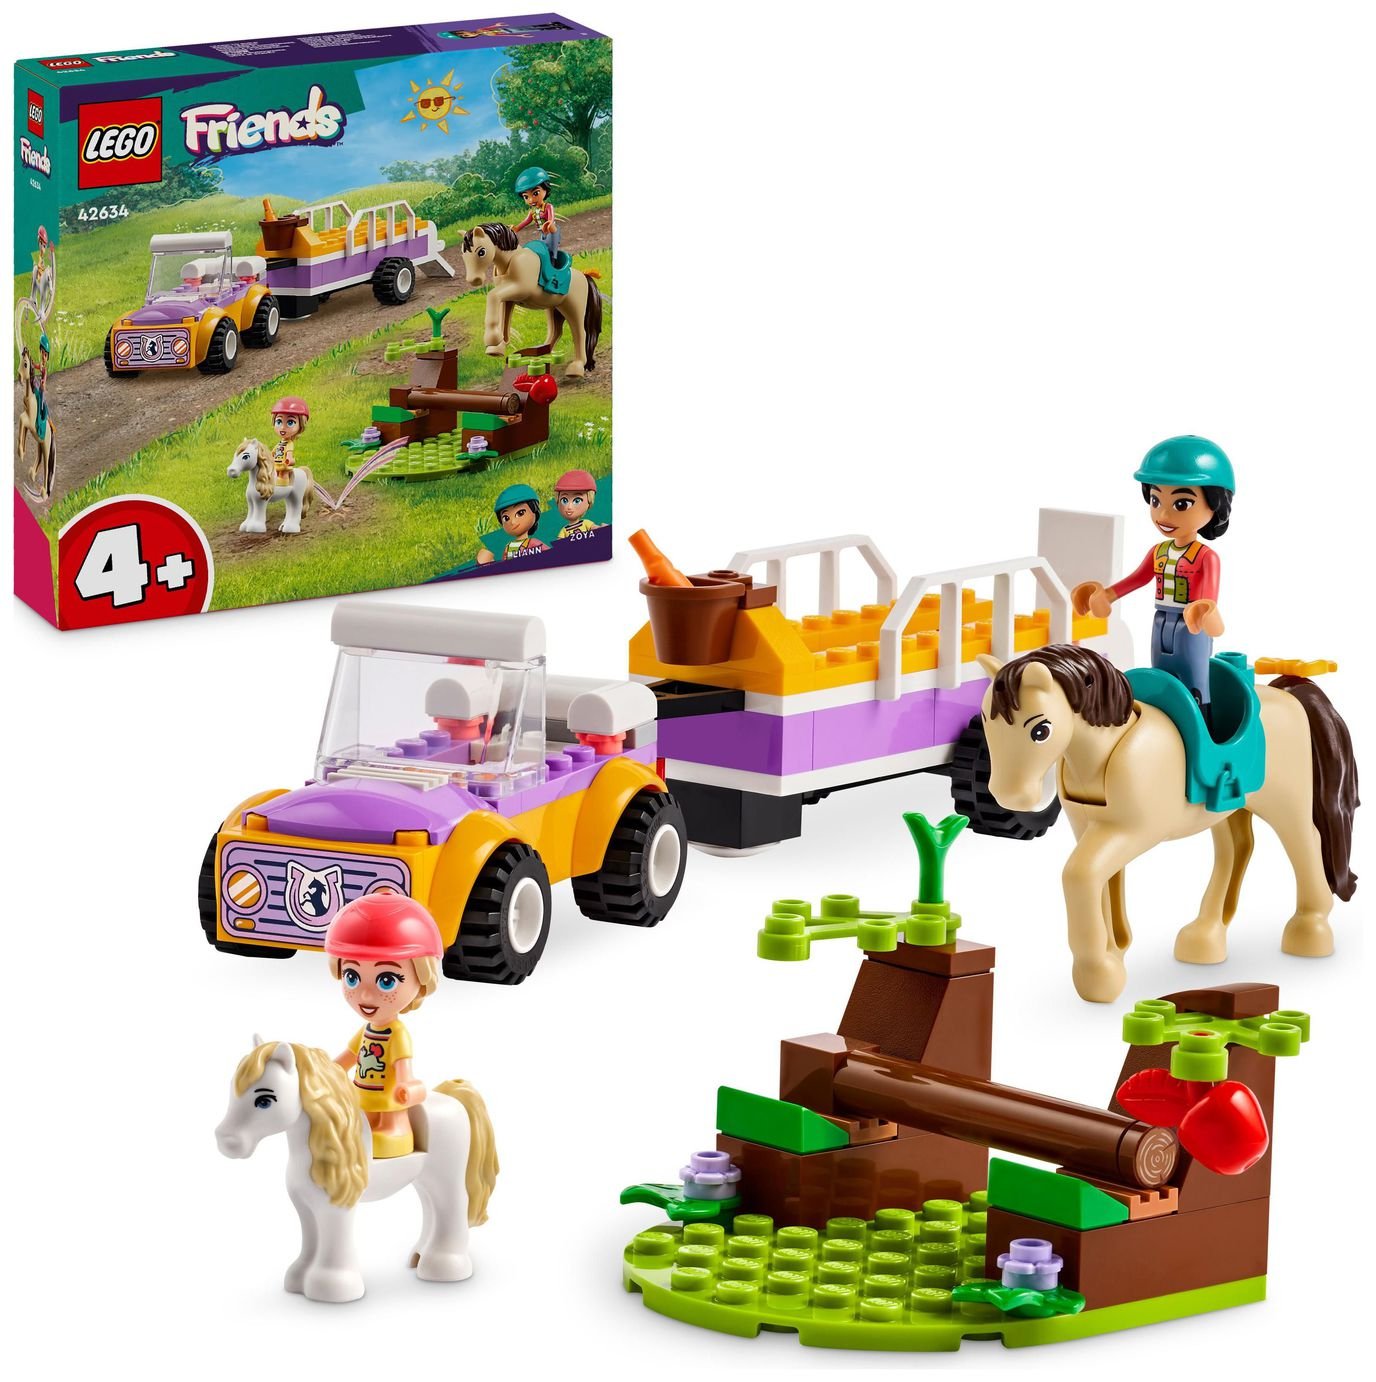 LEGO Friends Horse and Pony Trailer Animal Toys Set 42634